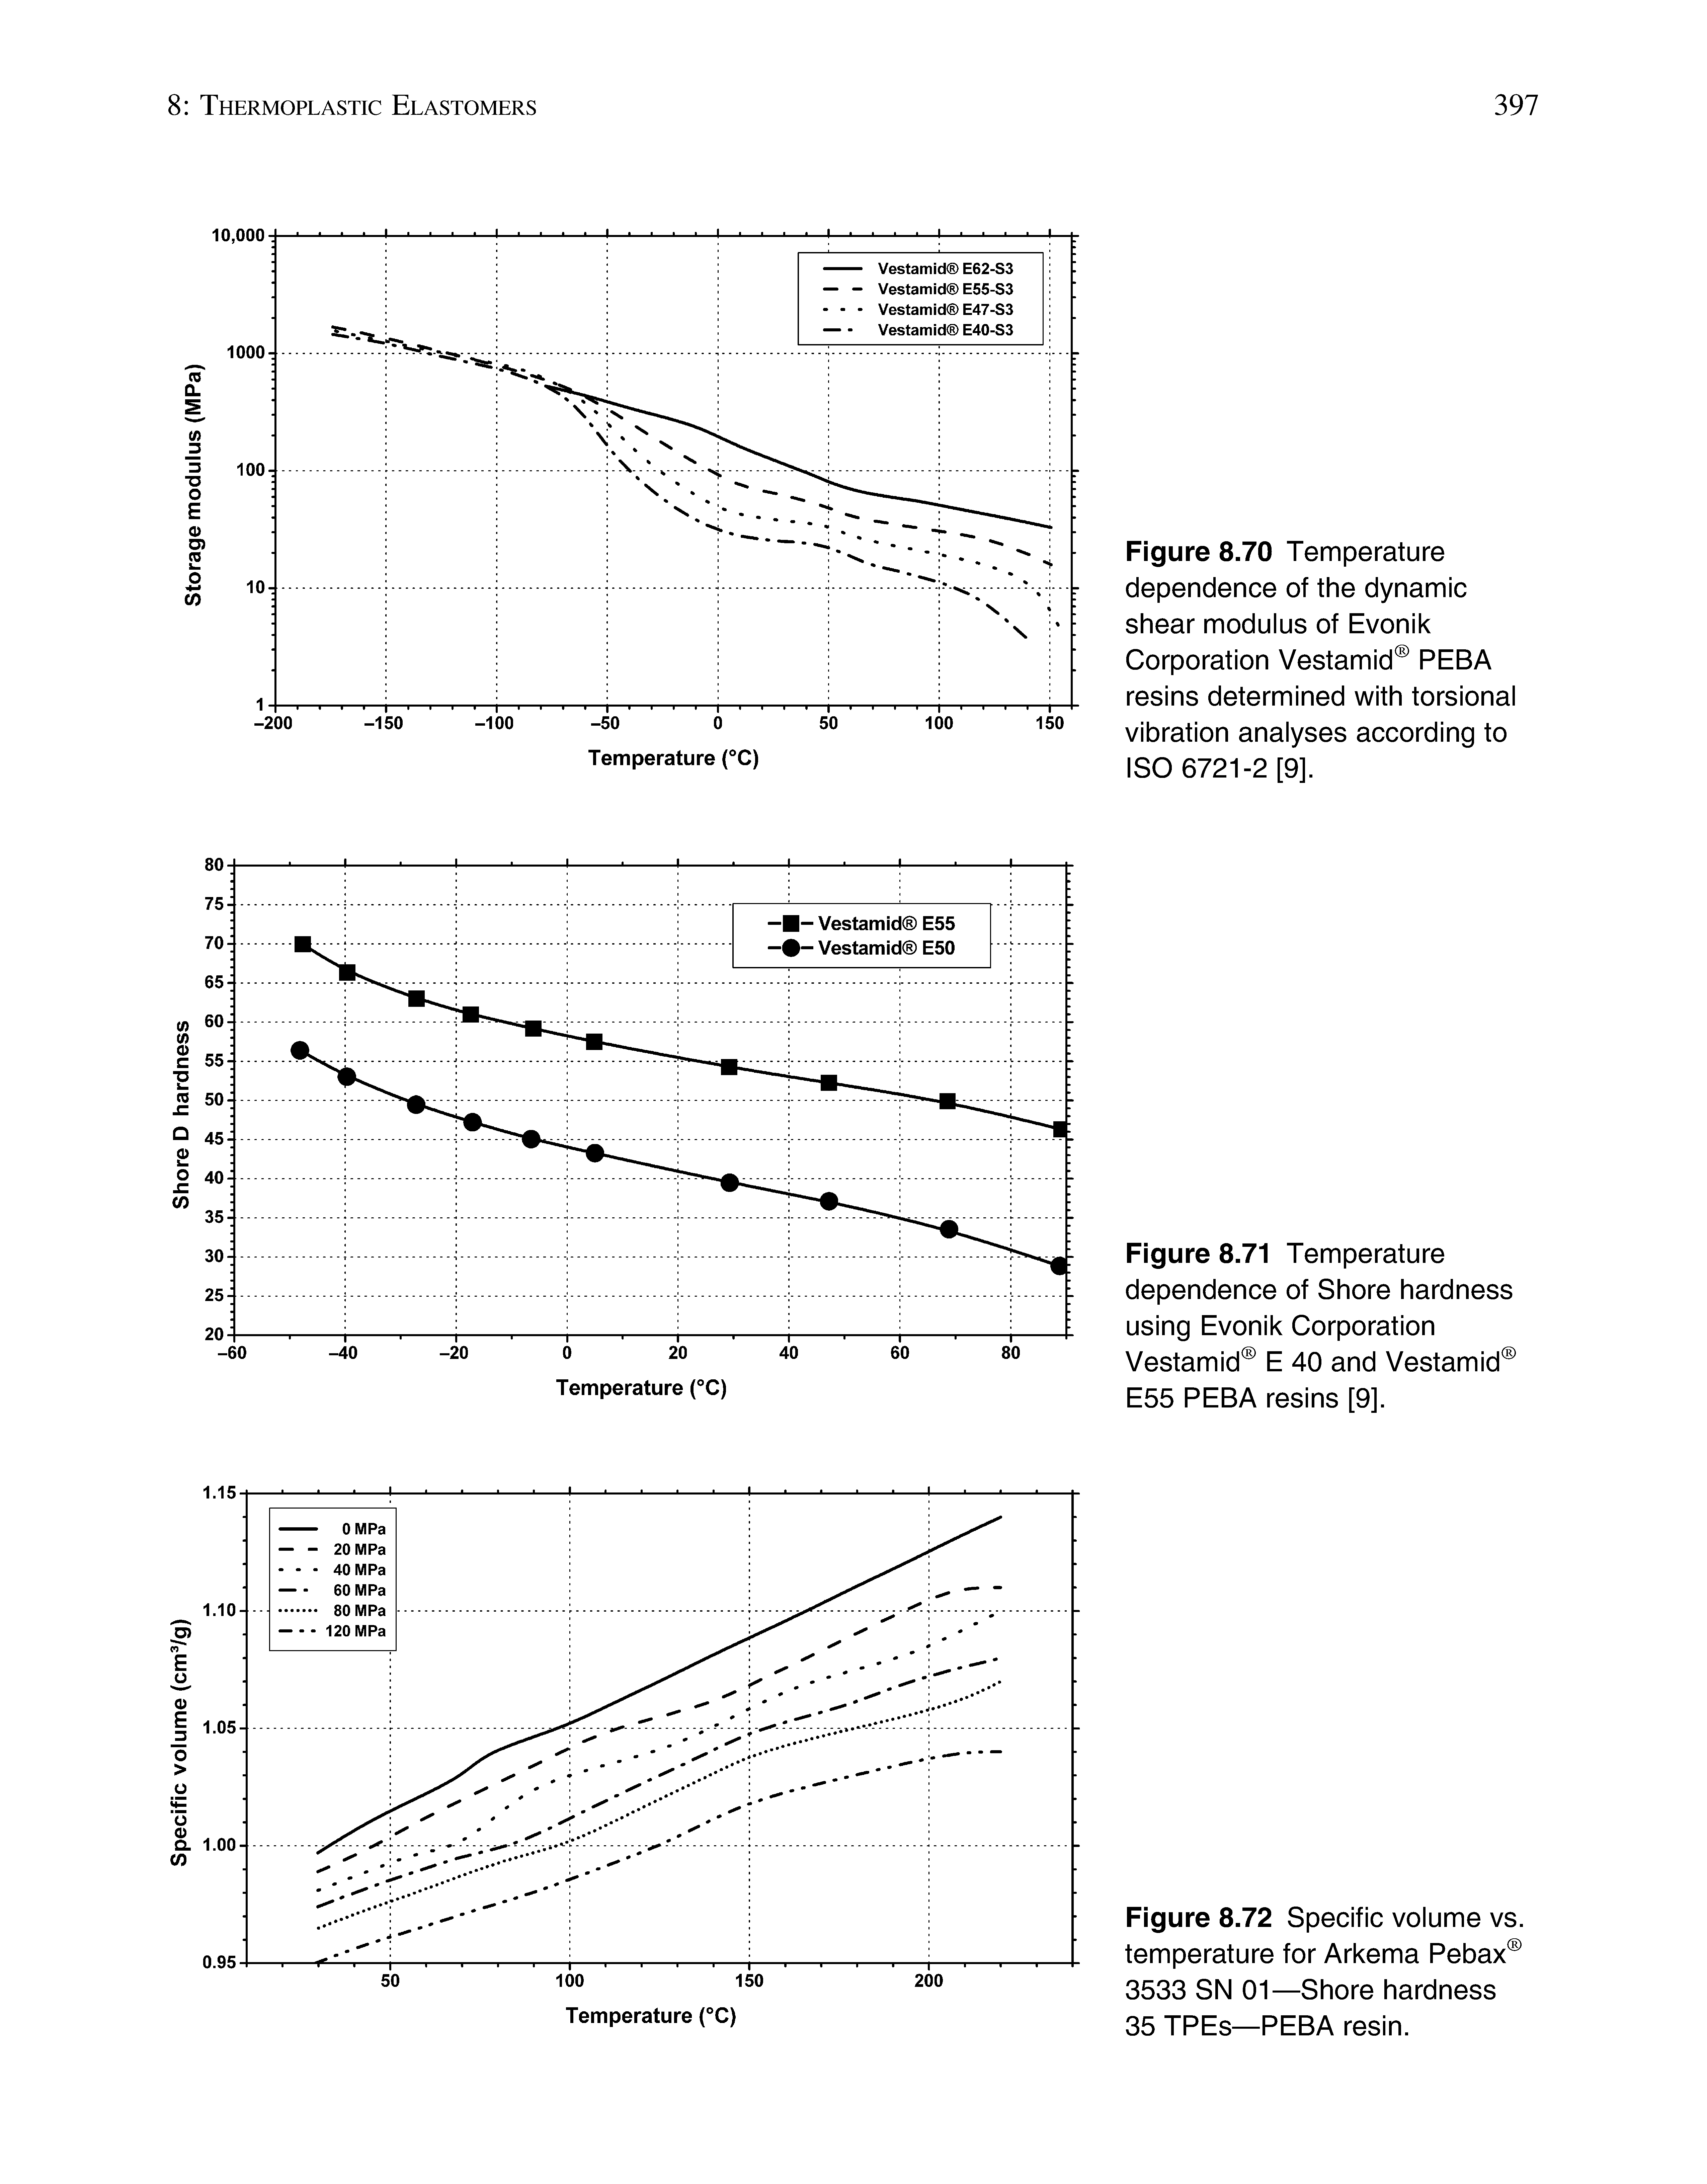 Figure 8.72 Specific volume vs. temperature for Arkema Pebax 3533 SN 01—Shore hardness 35 TPEs—PEBA resin.